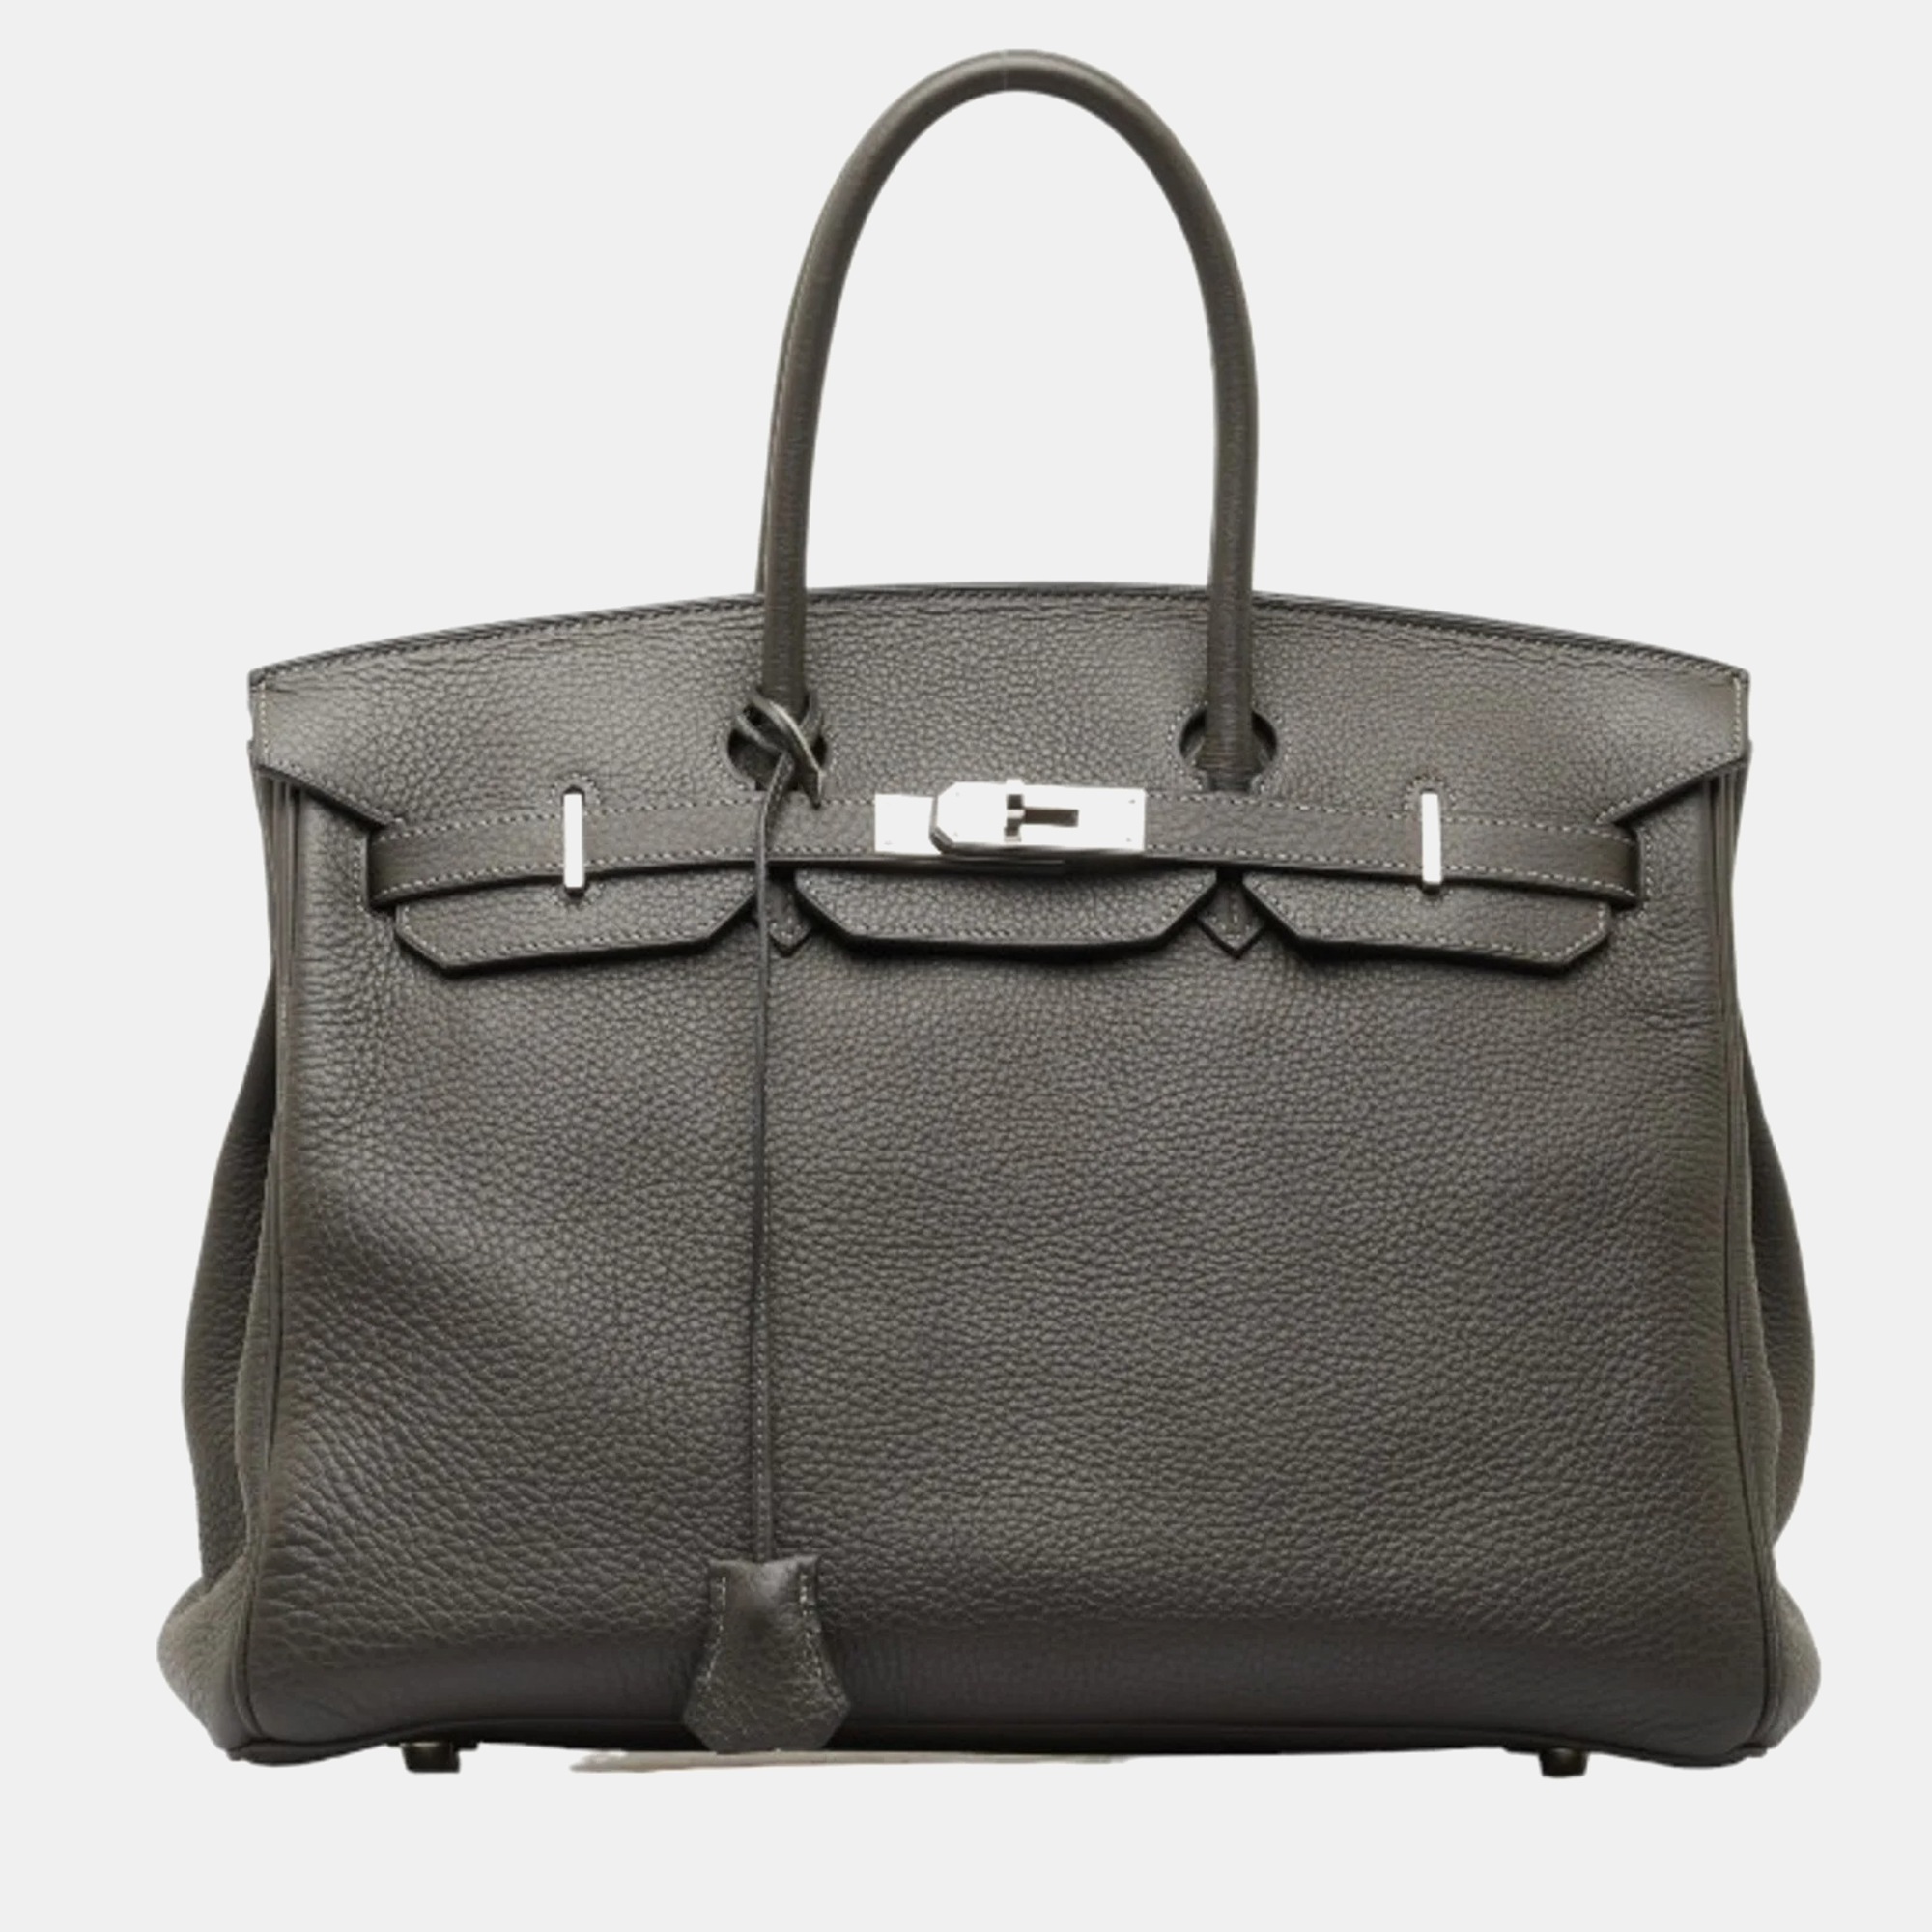 Hermes grey togo birkin 35 handbag